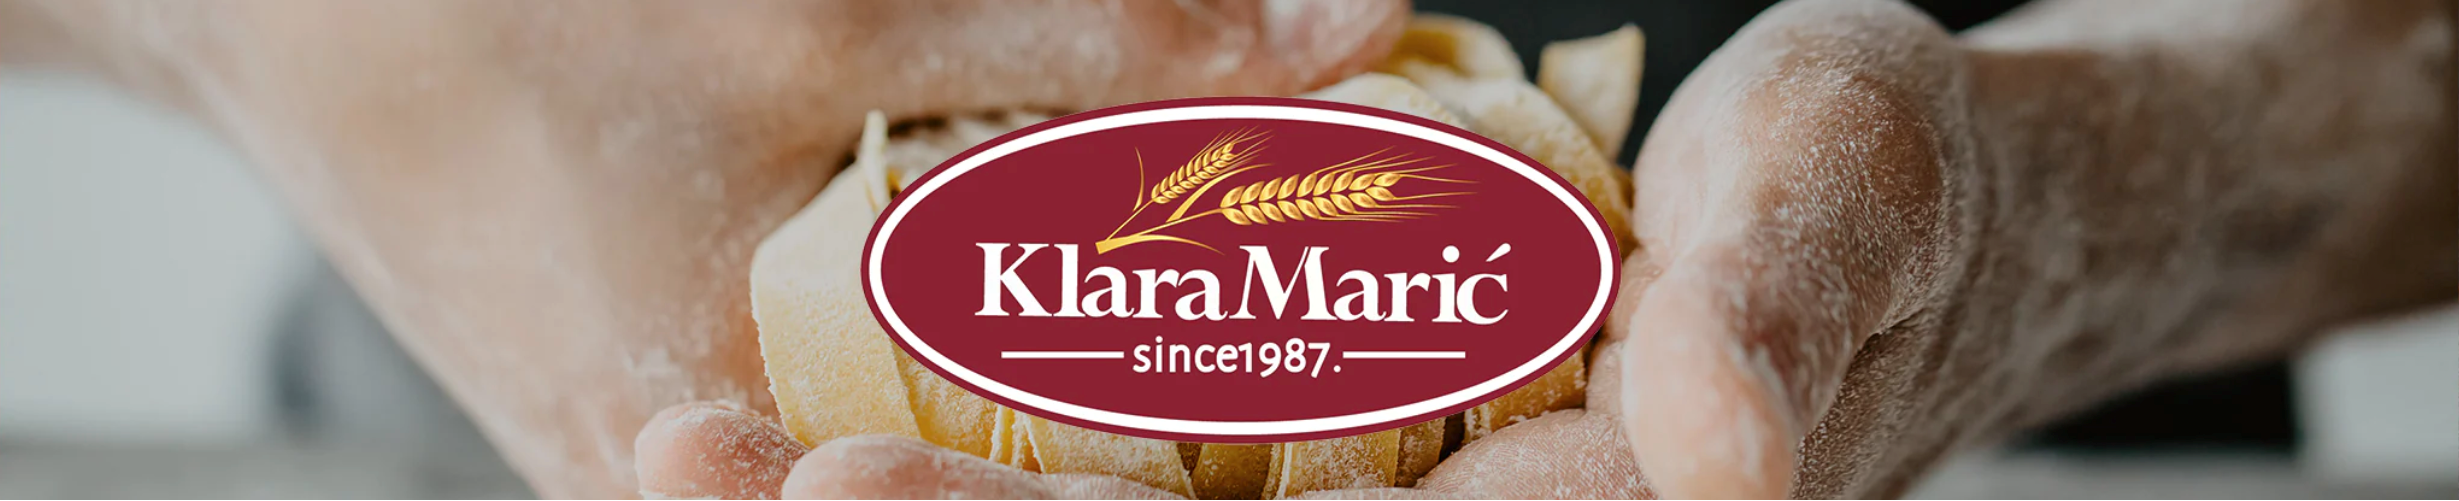 Klara Maric - Global Imports & Exports Wholesale European Food Distributors